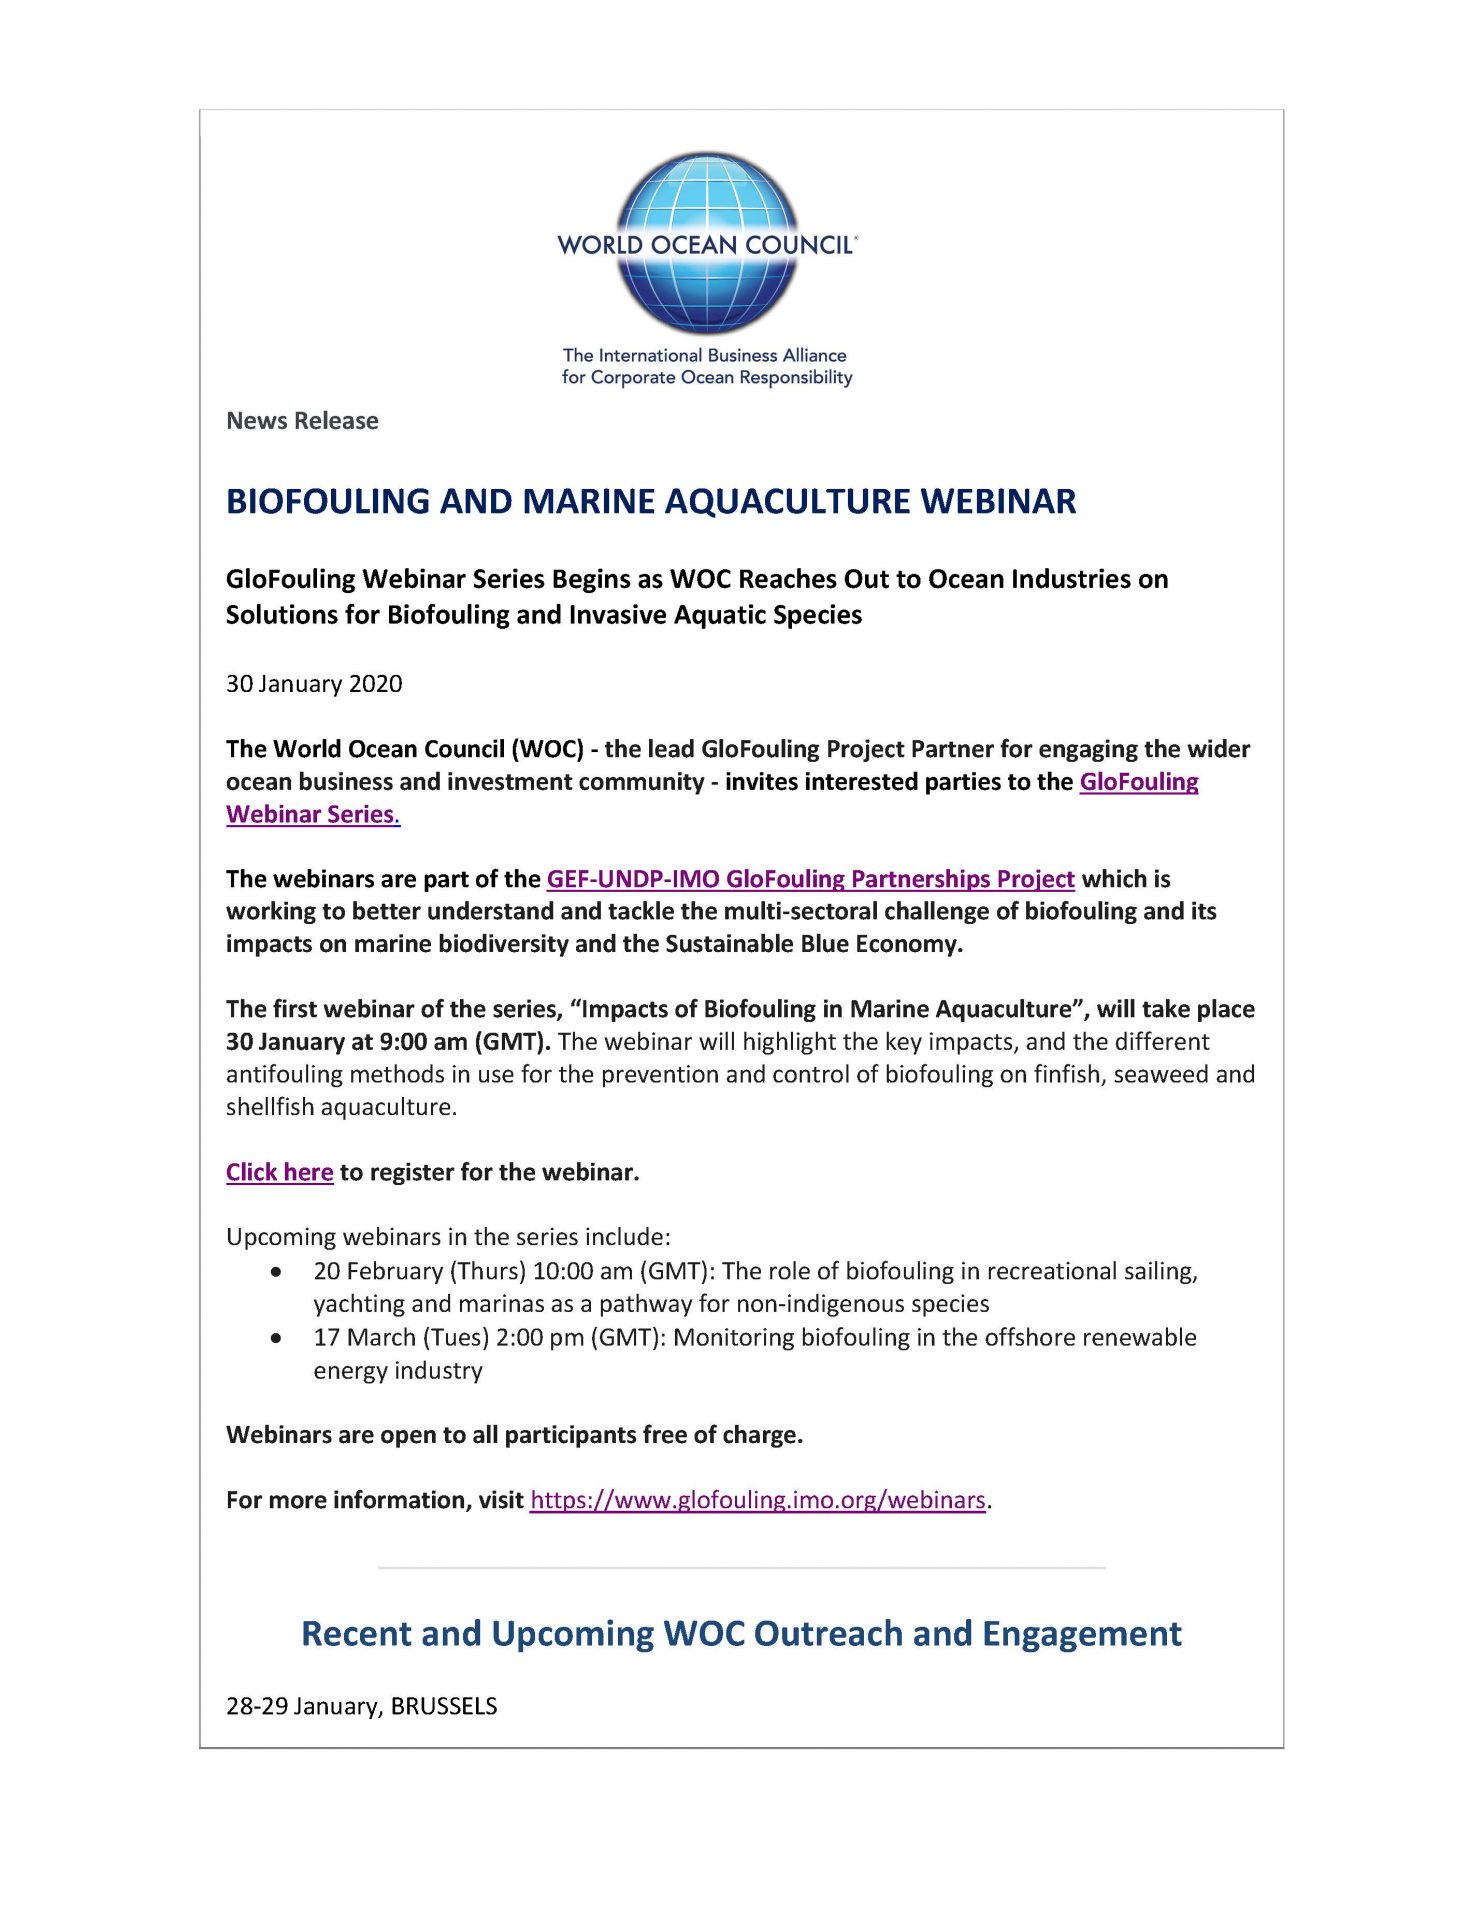 Biofouling and Marine Aquaculture Webinar - 30 January 2020